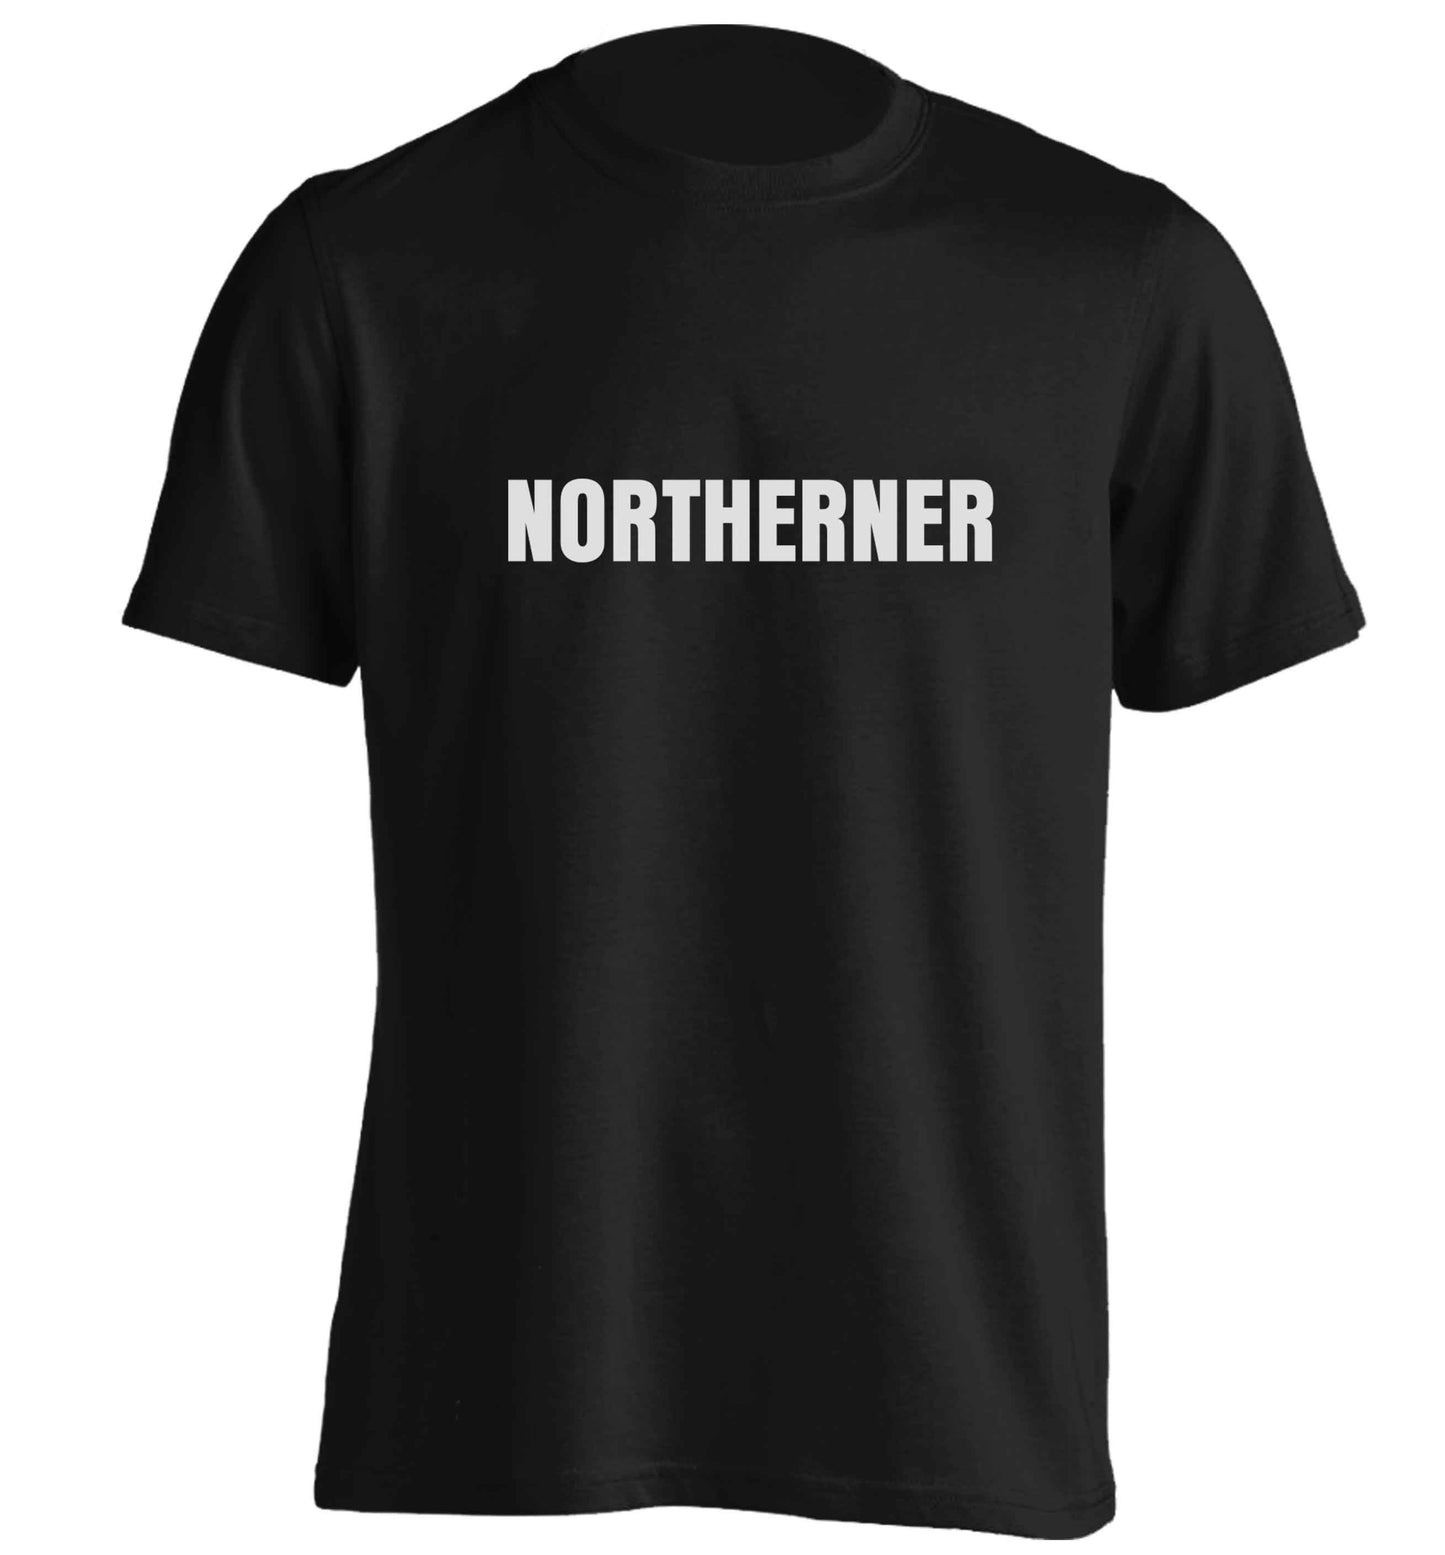 Northerner adults unisex black Tshirt 2XL